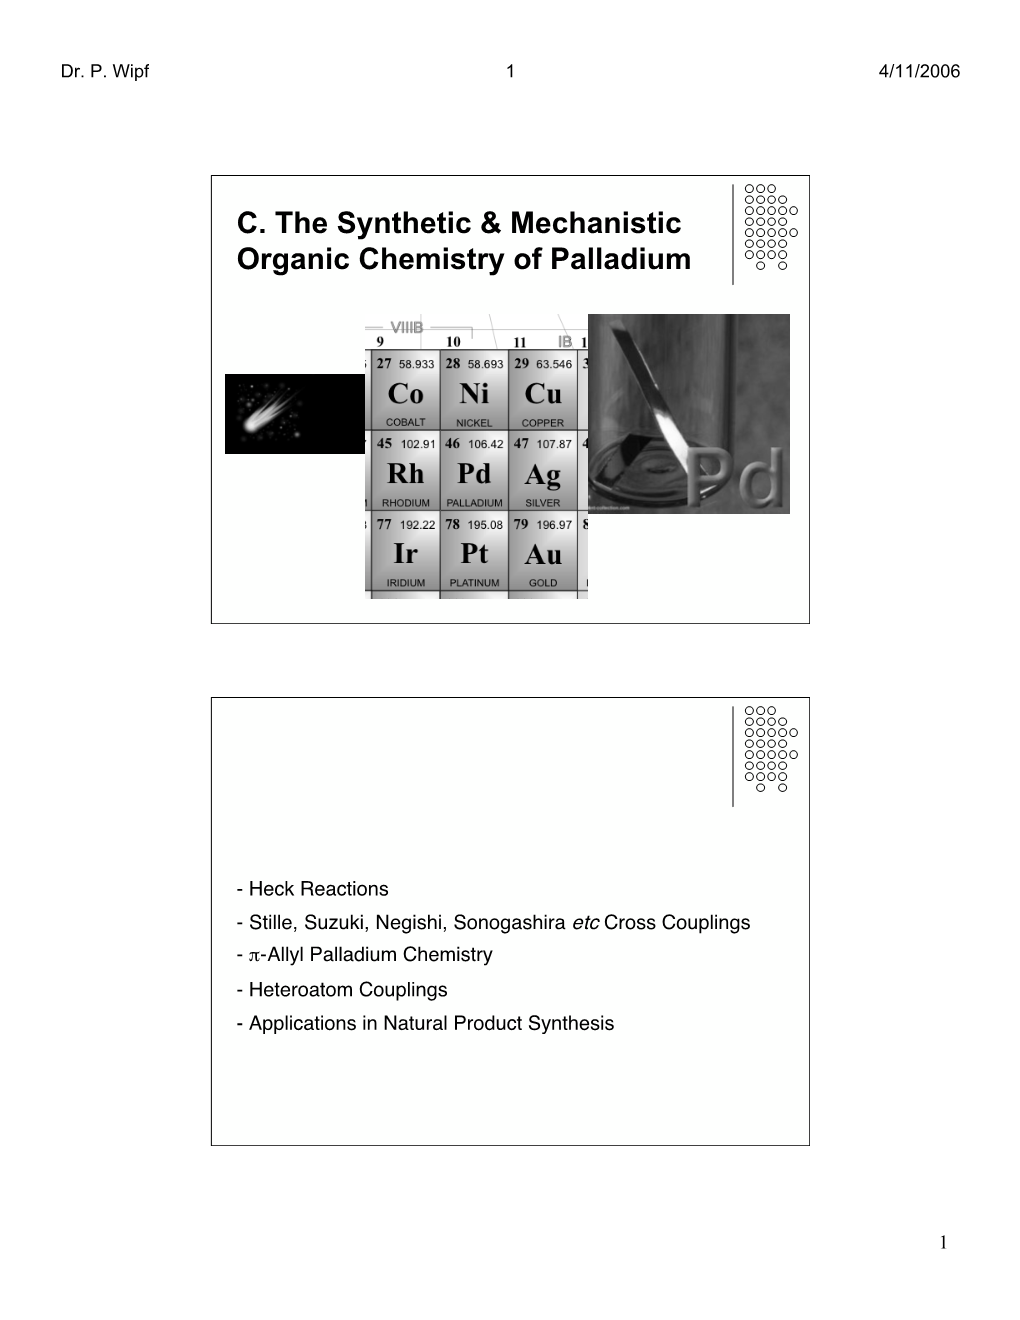 C. the Synthetic & Mechanistic Organic Chemistry of Palladium